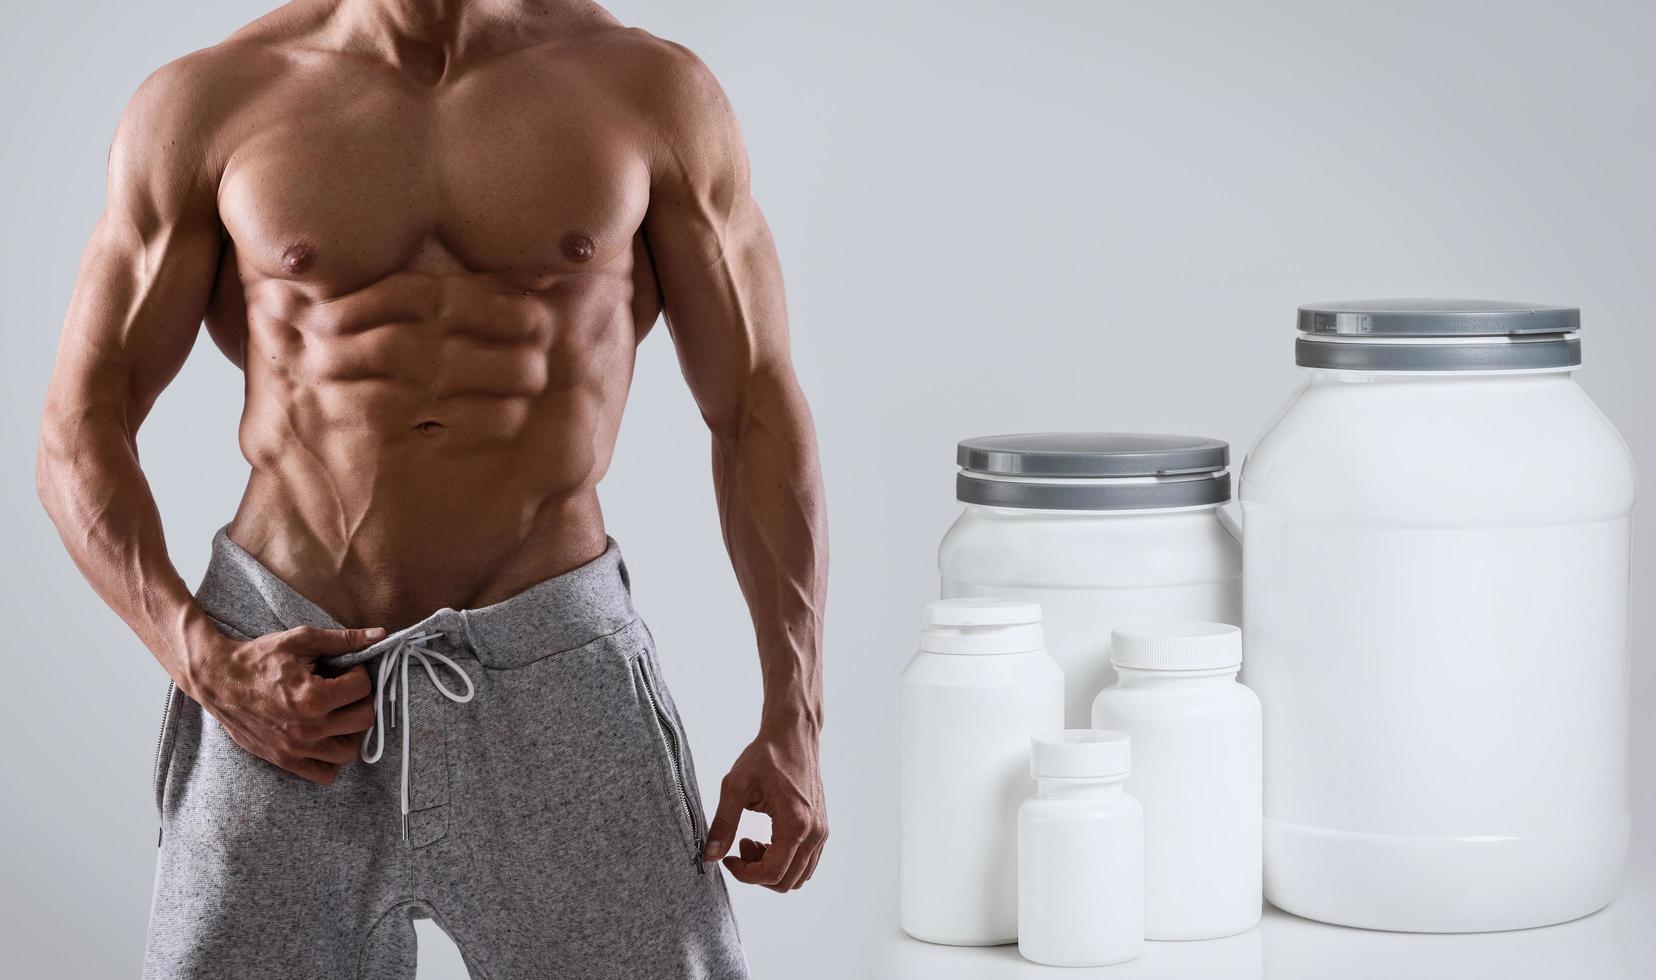 torso masculino musculoso con diferentes complementos alimenticios foto